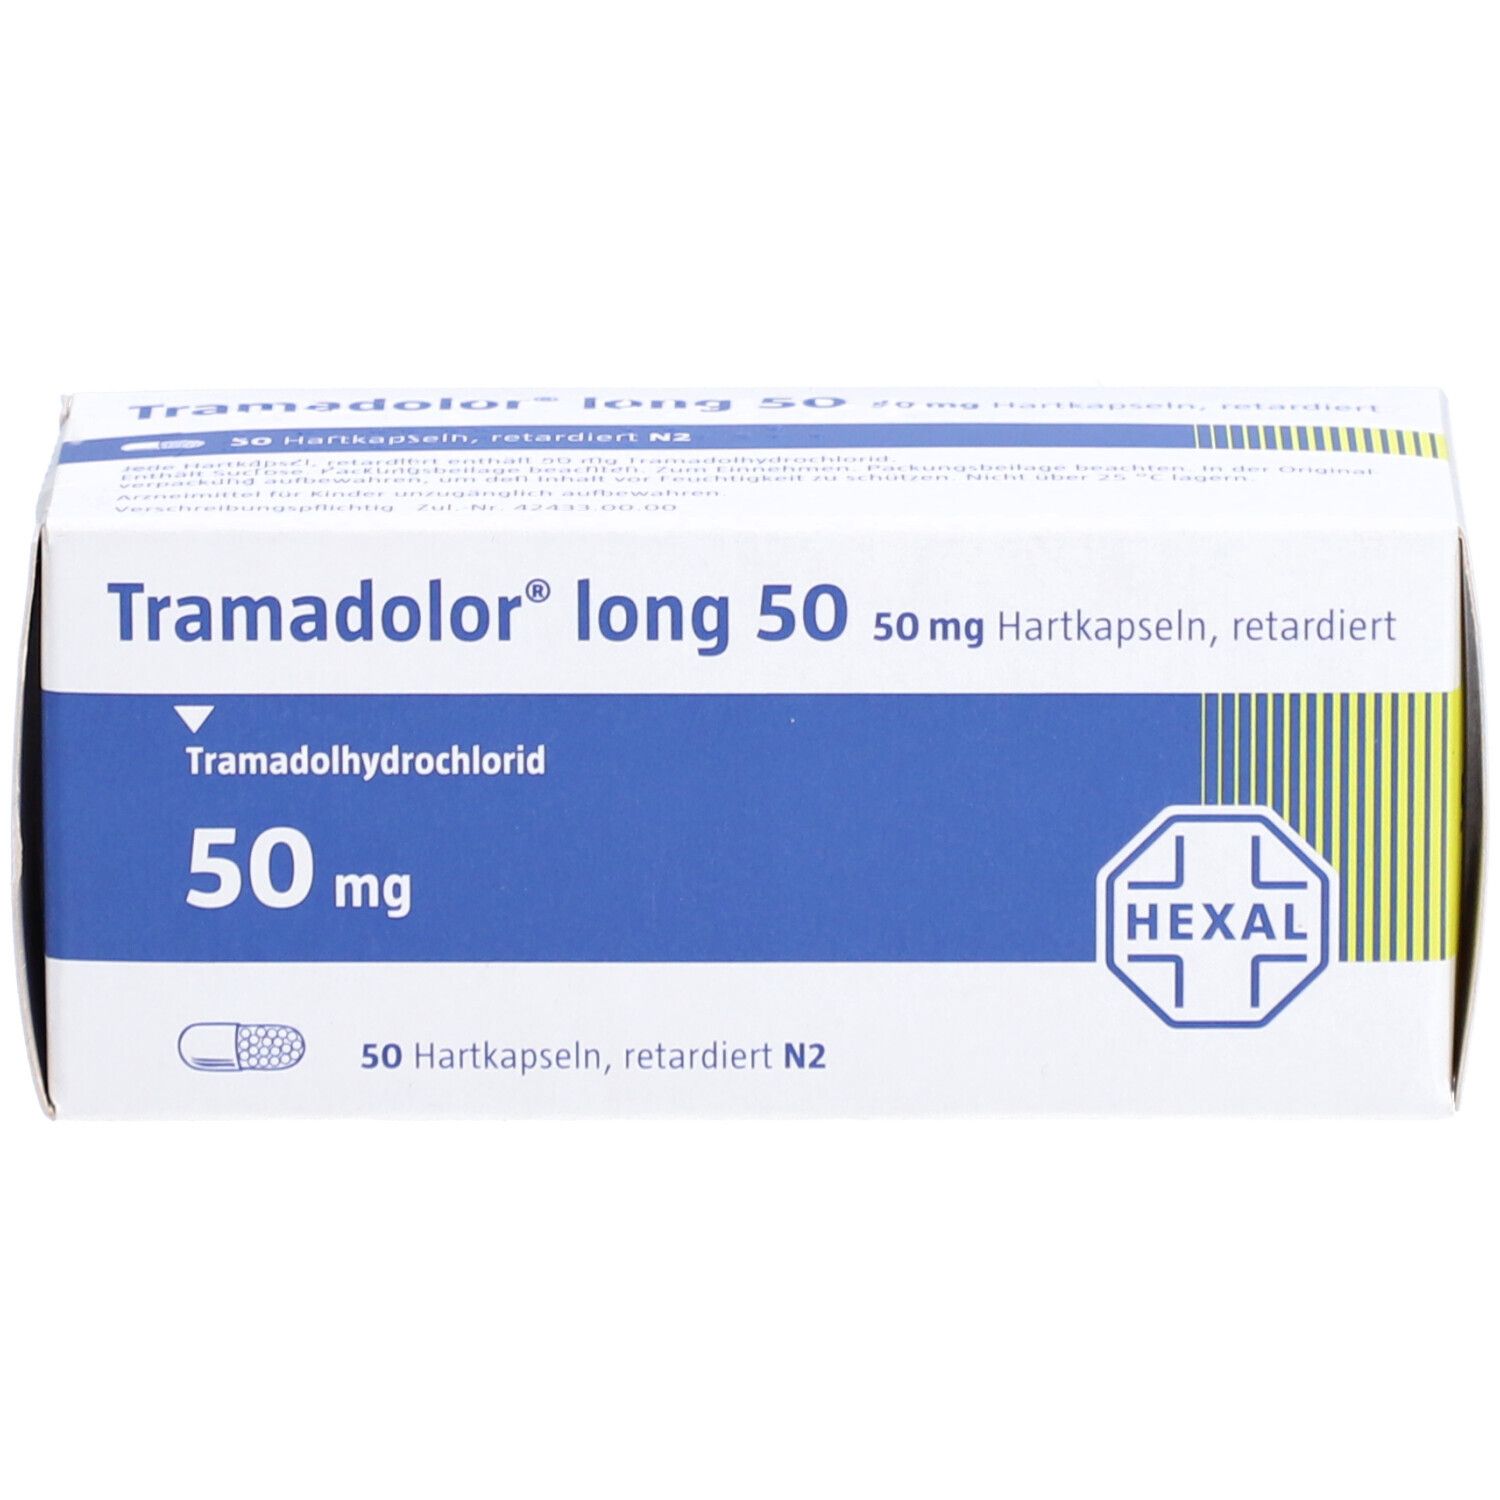 Tramadolor® long 50 mg retard